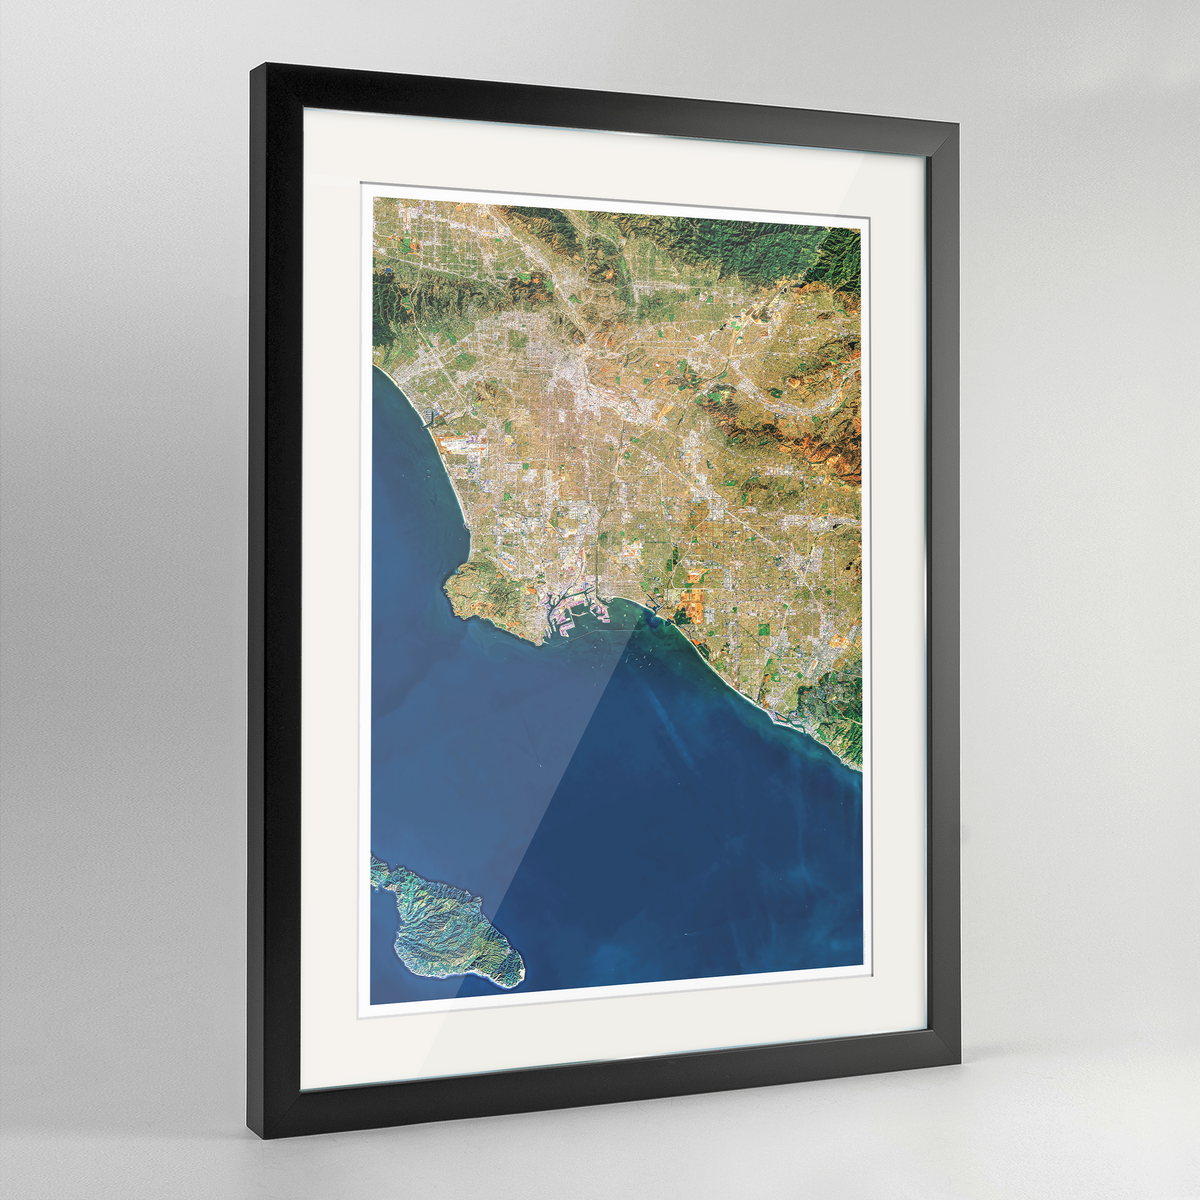 Los Angeles Earth Photography Art Print - Framed